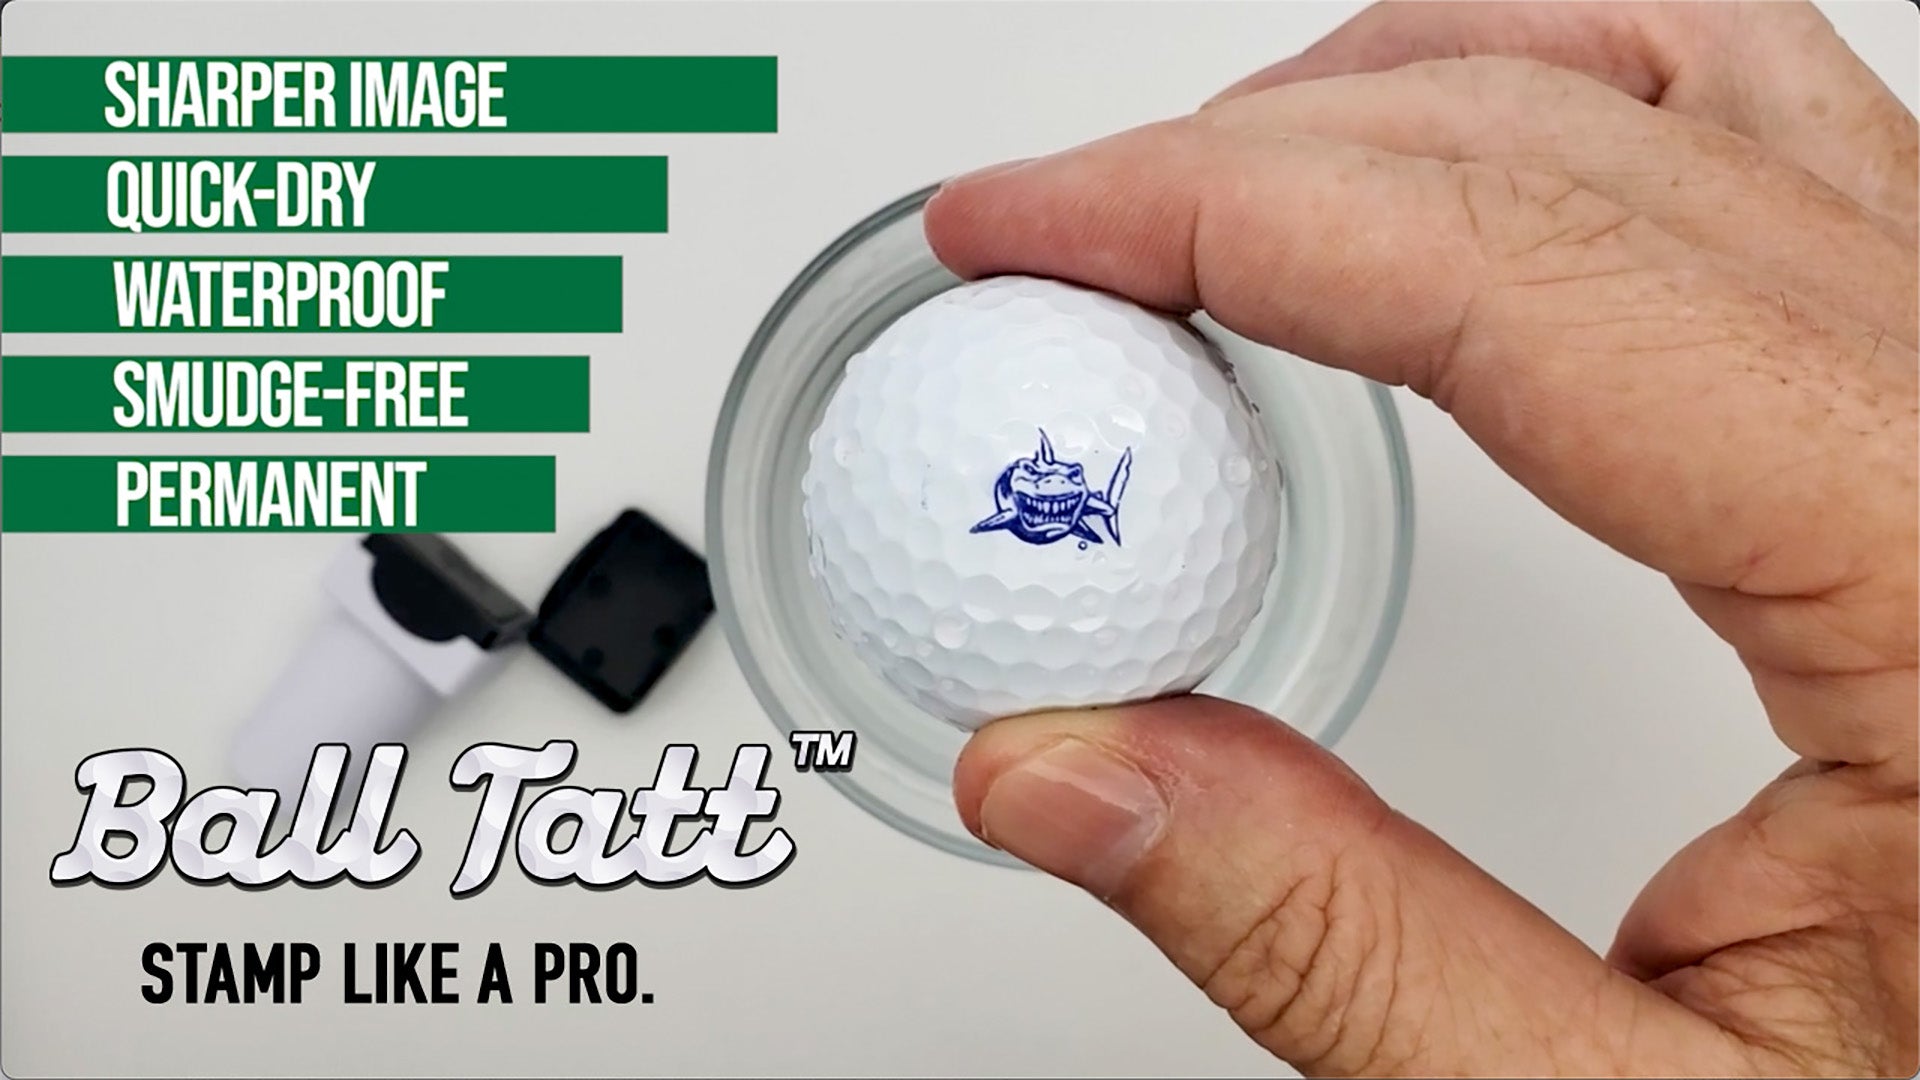 Load video: Ball Tatt golf ball stamp instructions